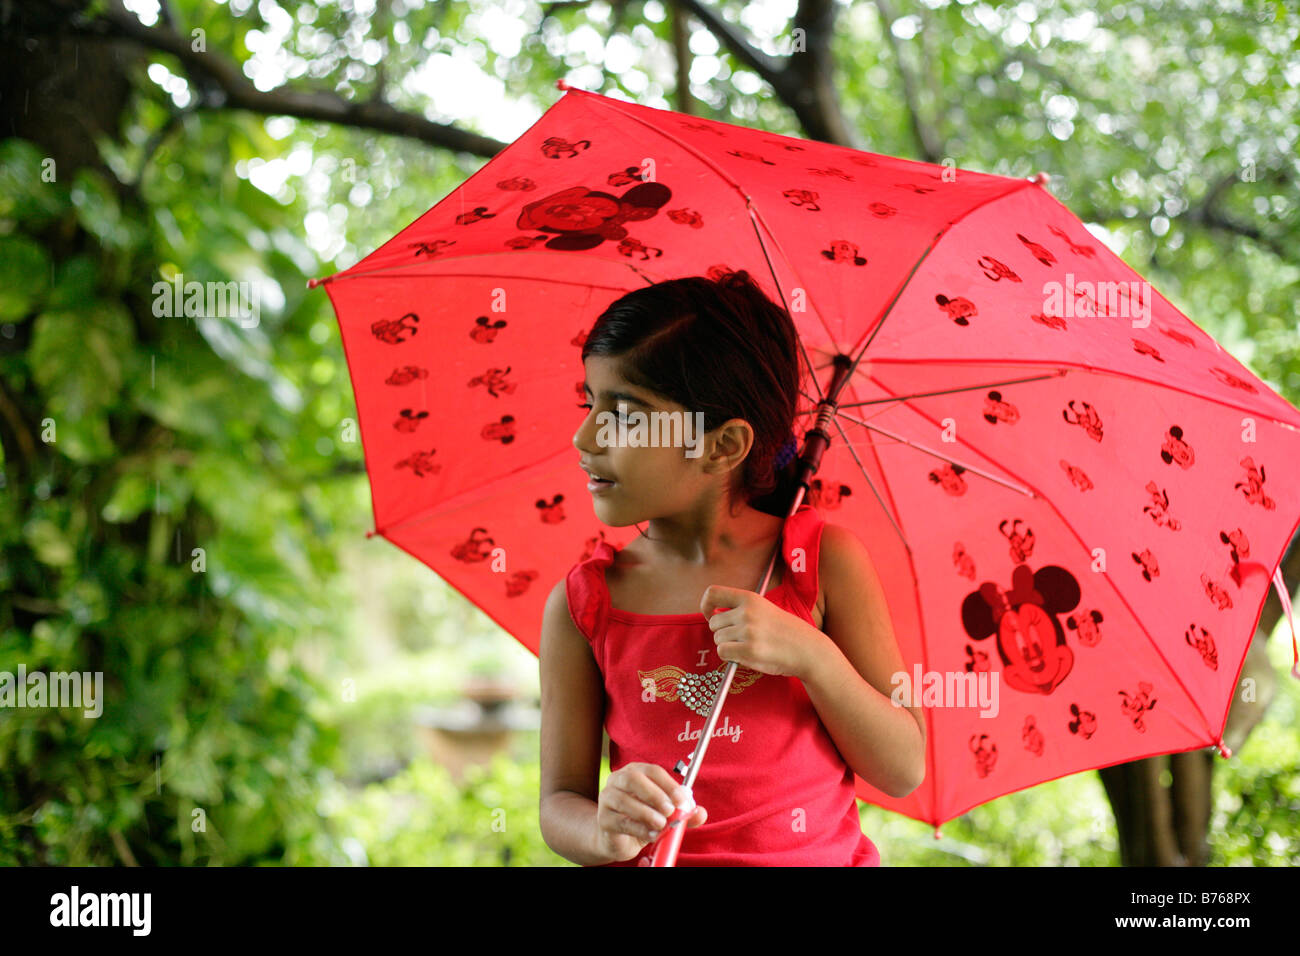 Innocent young girl holding an umbrella and enjoying the monsoon rains Stock Photo